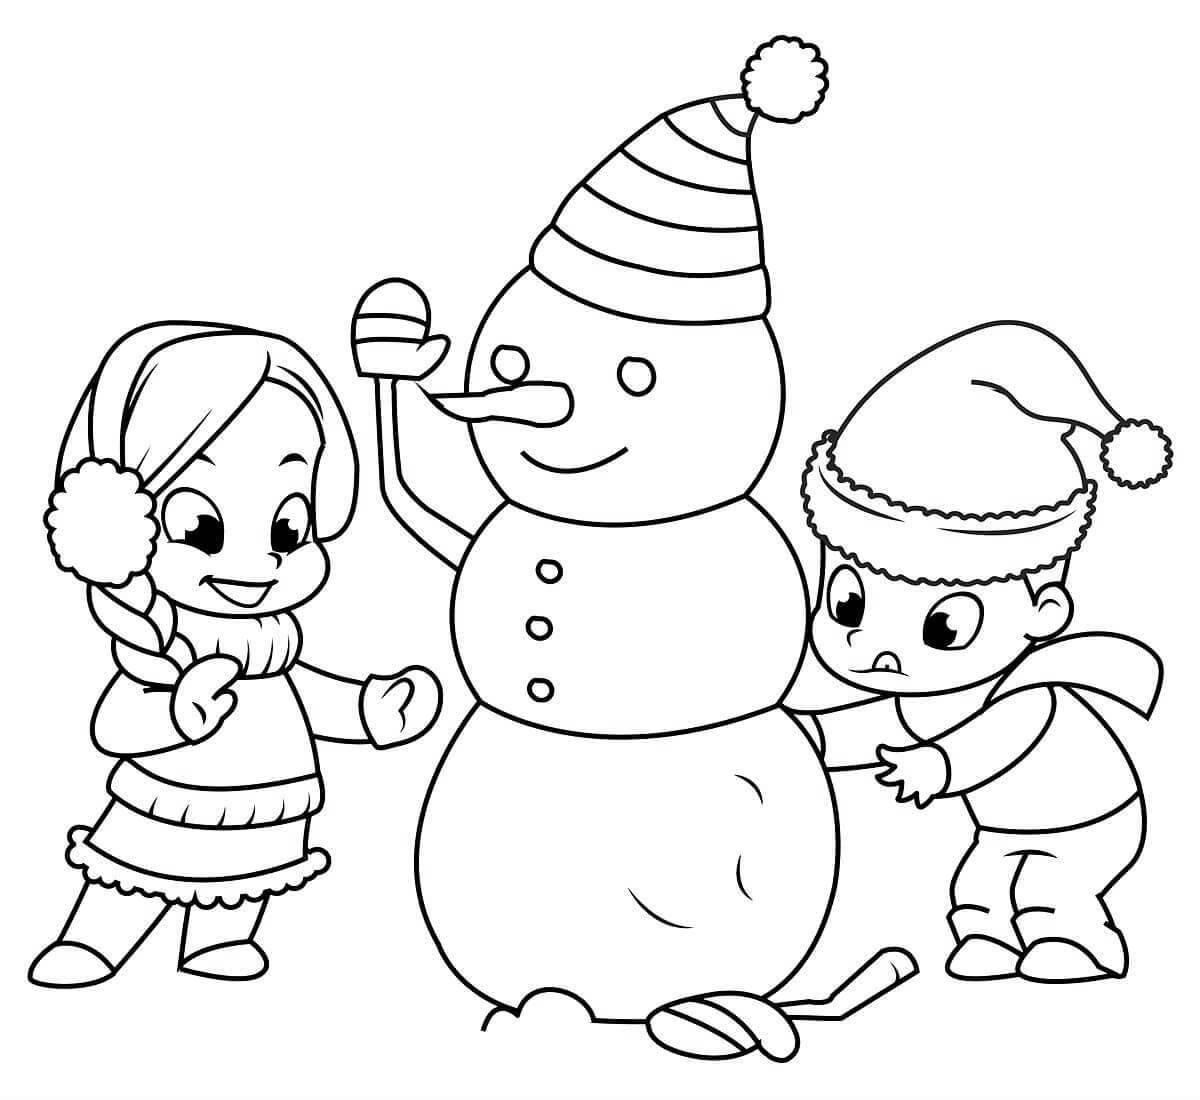 Crazy coloring kids make a snowman